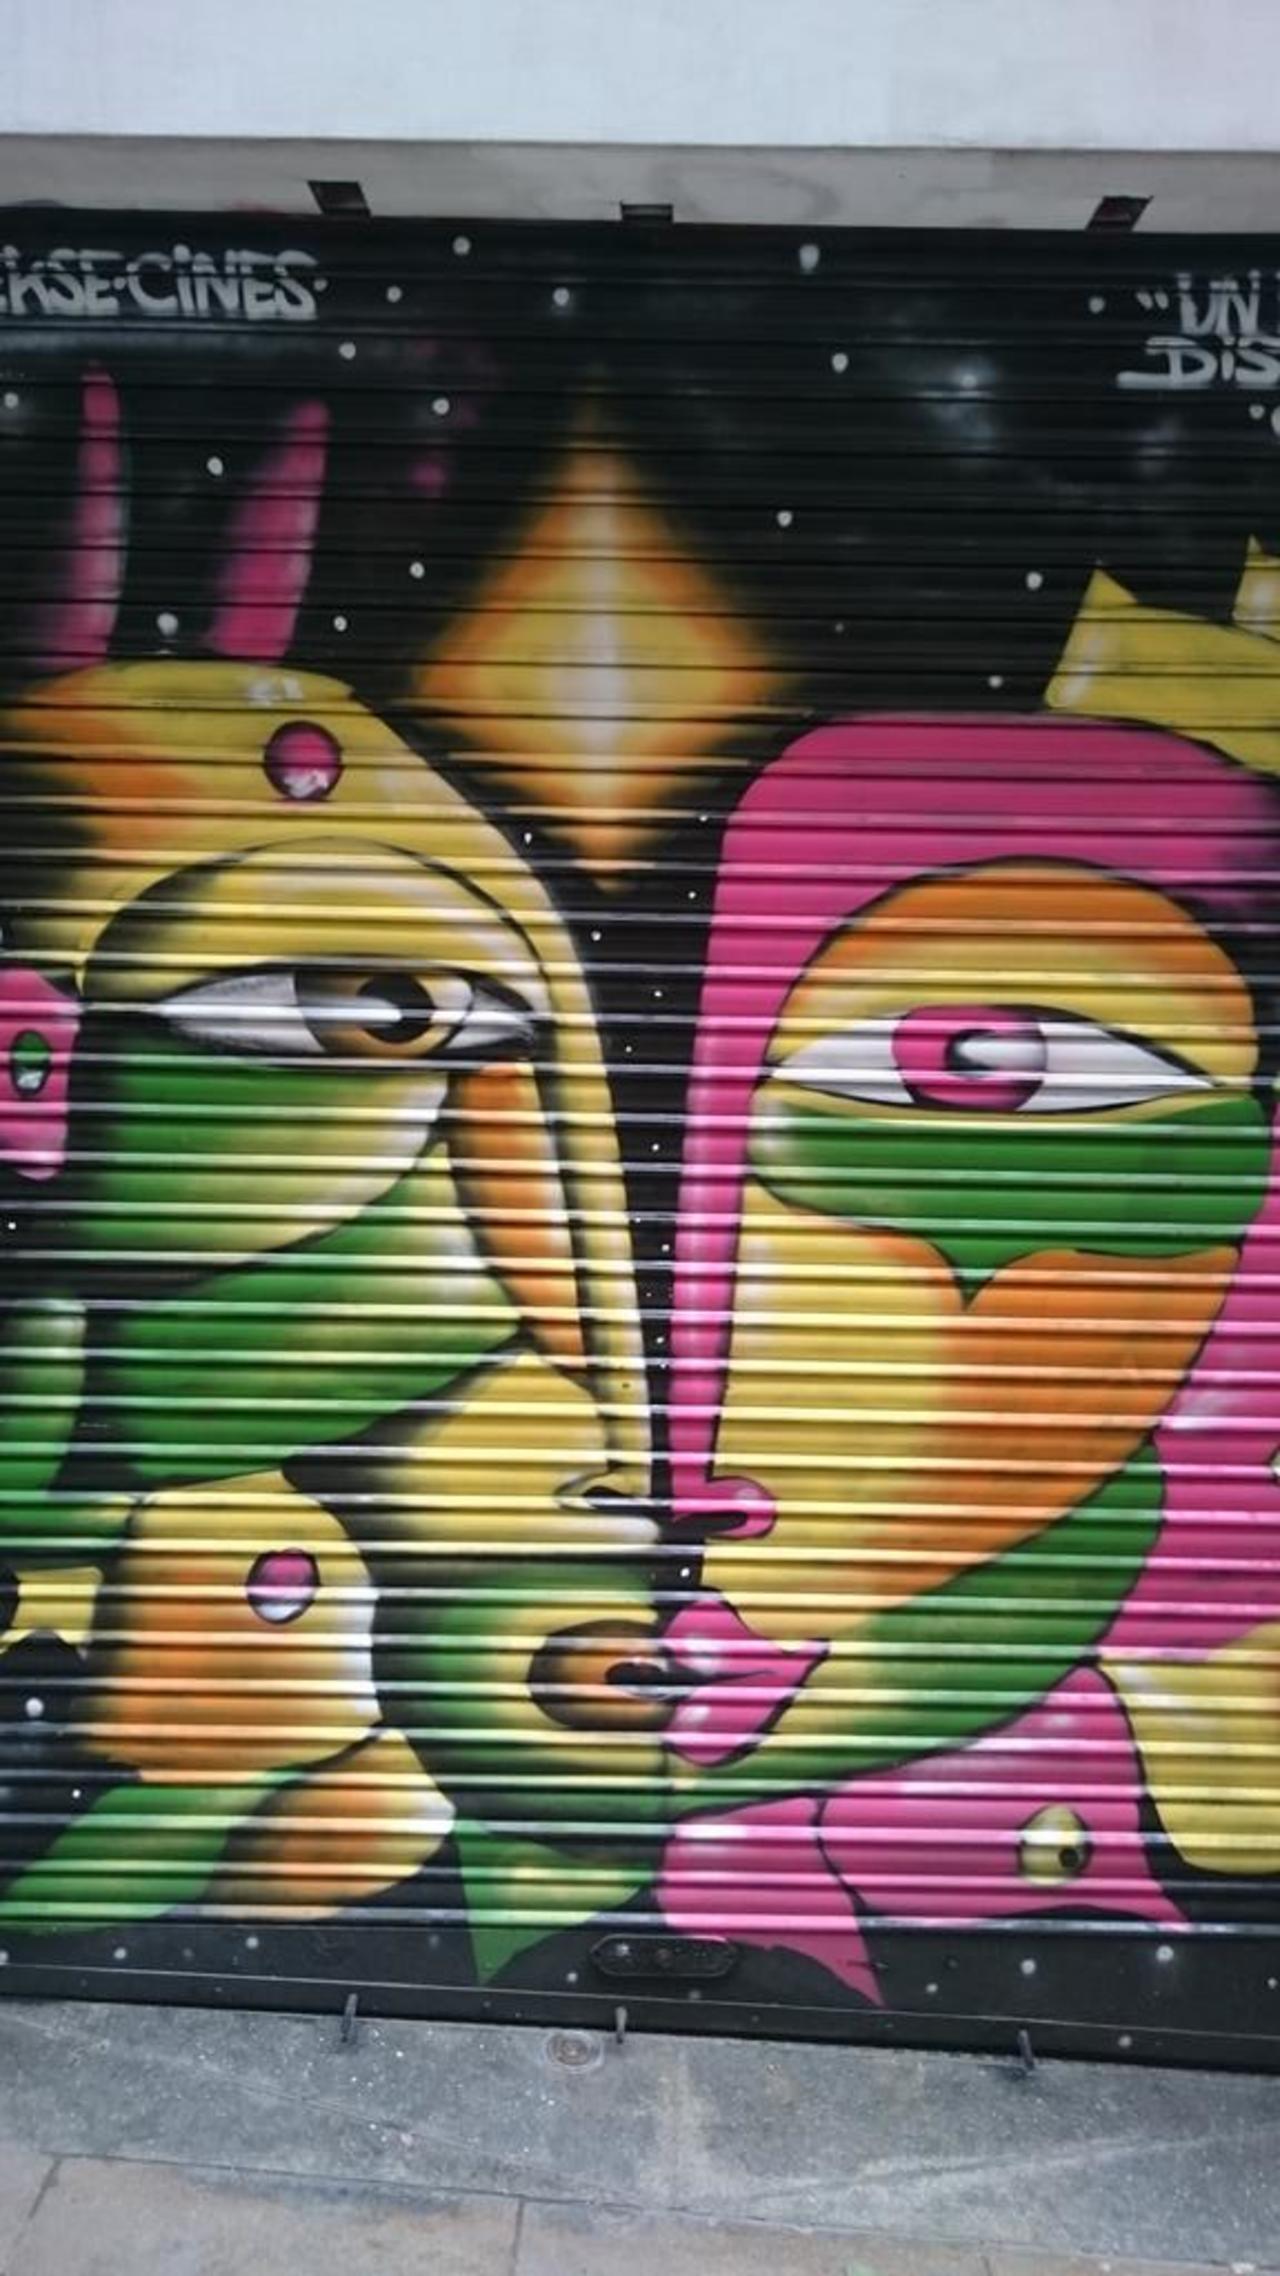 RT @Urban_Tentacles: Graffiti in Barcelona #Barca #streetart #graffiti #urbanart https://t.co/8oKxmdutJU